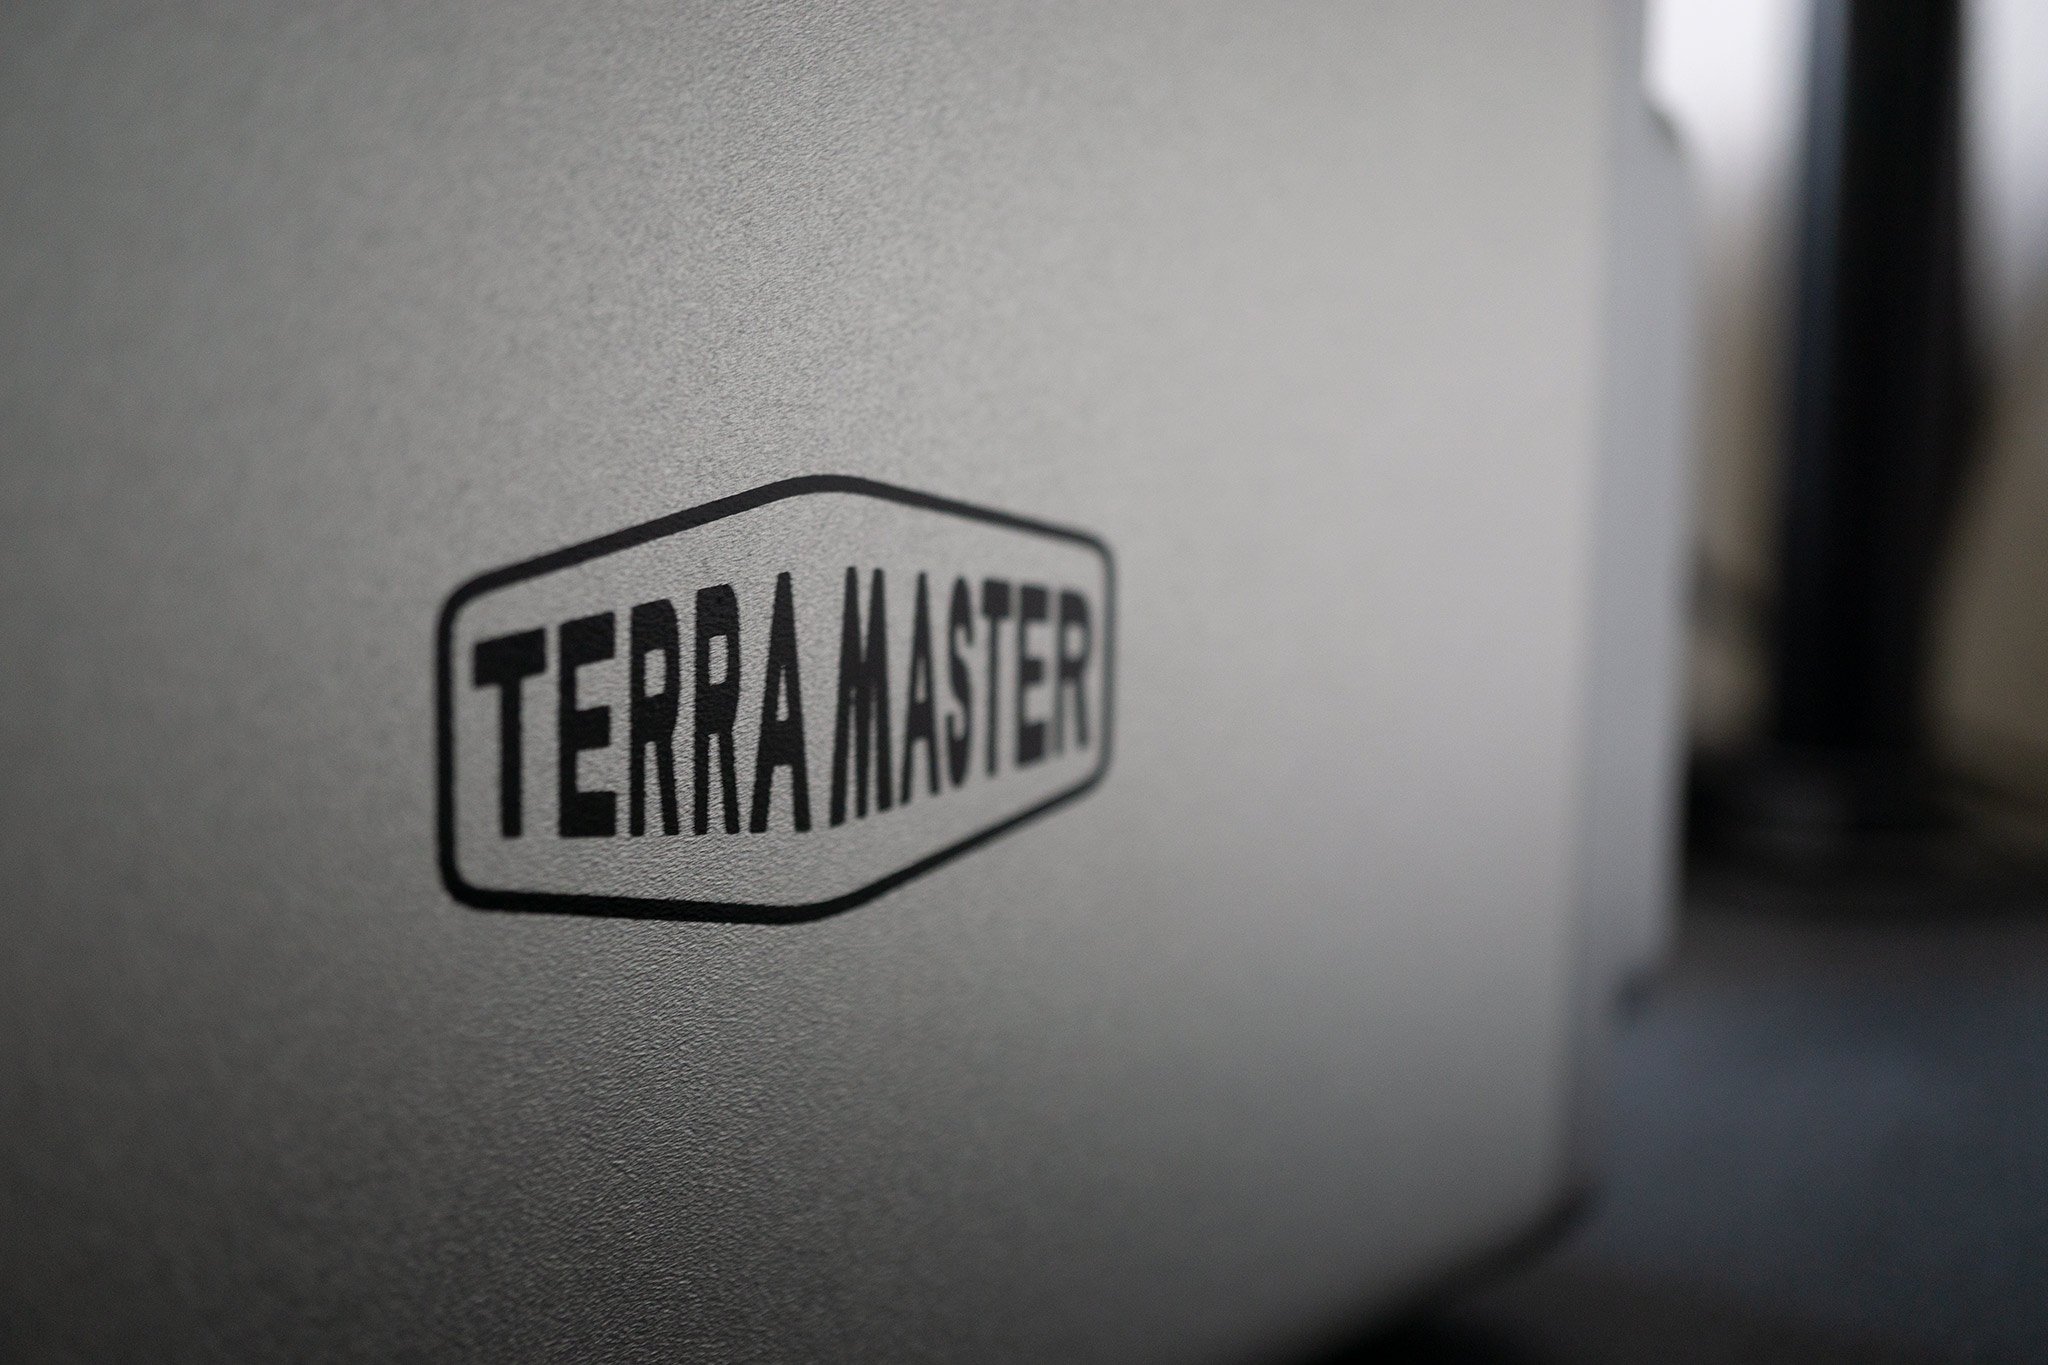 TerraMaster F4-220